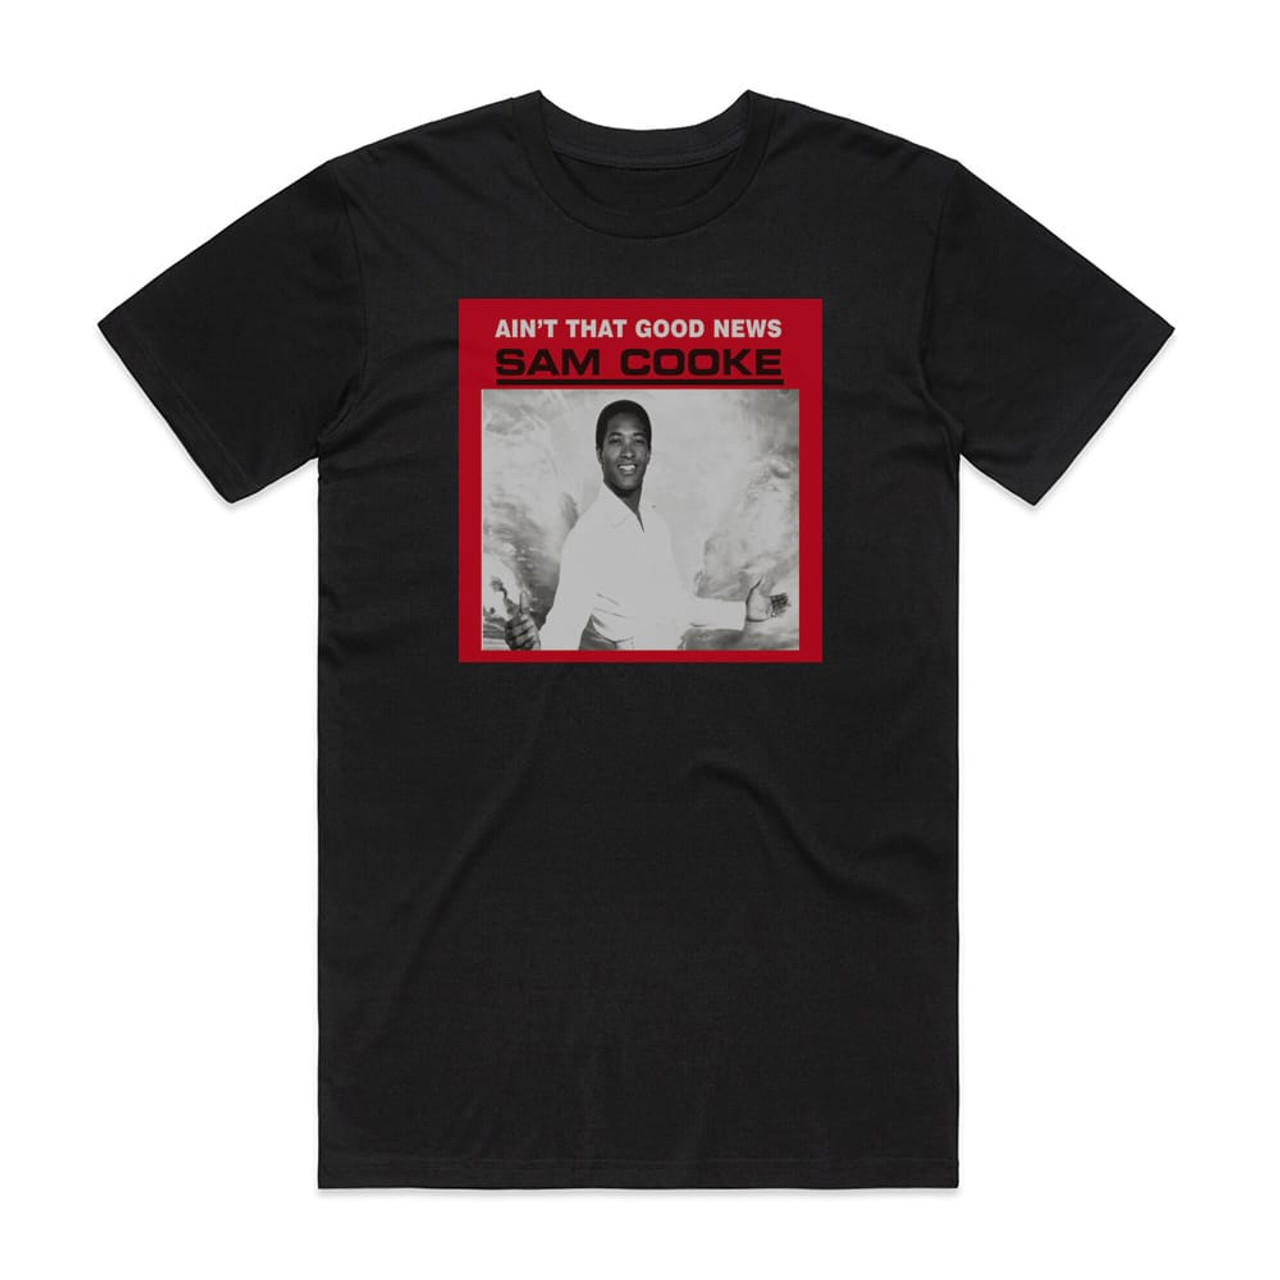 Sam Cooke Aint That Good News 1 Album Cover T-Shirt Black